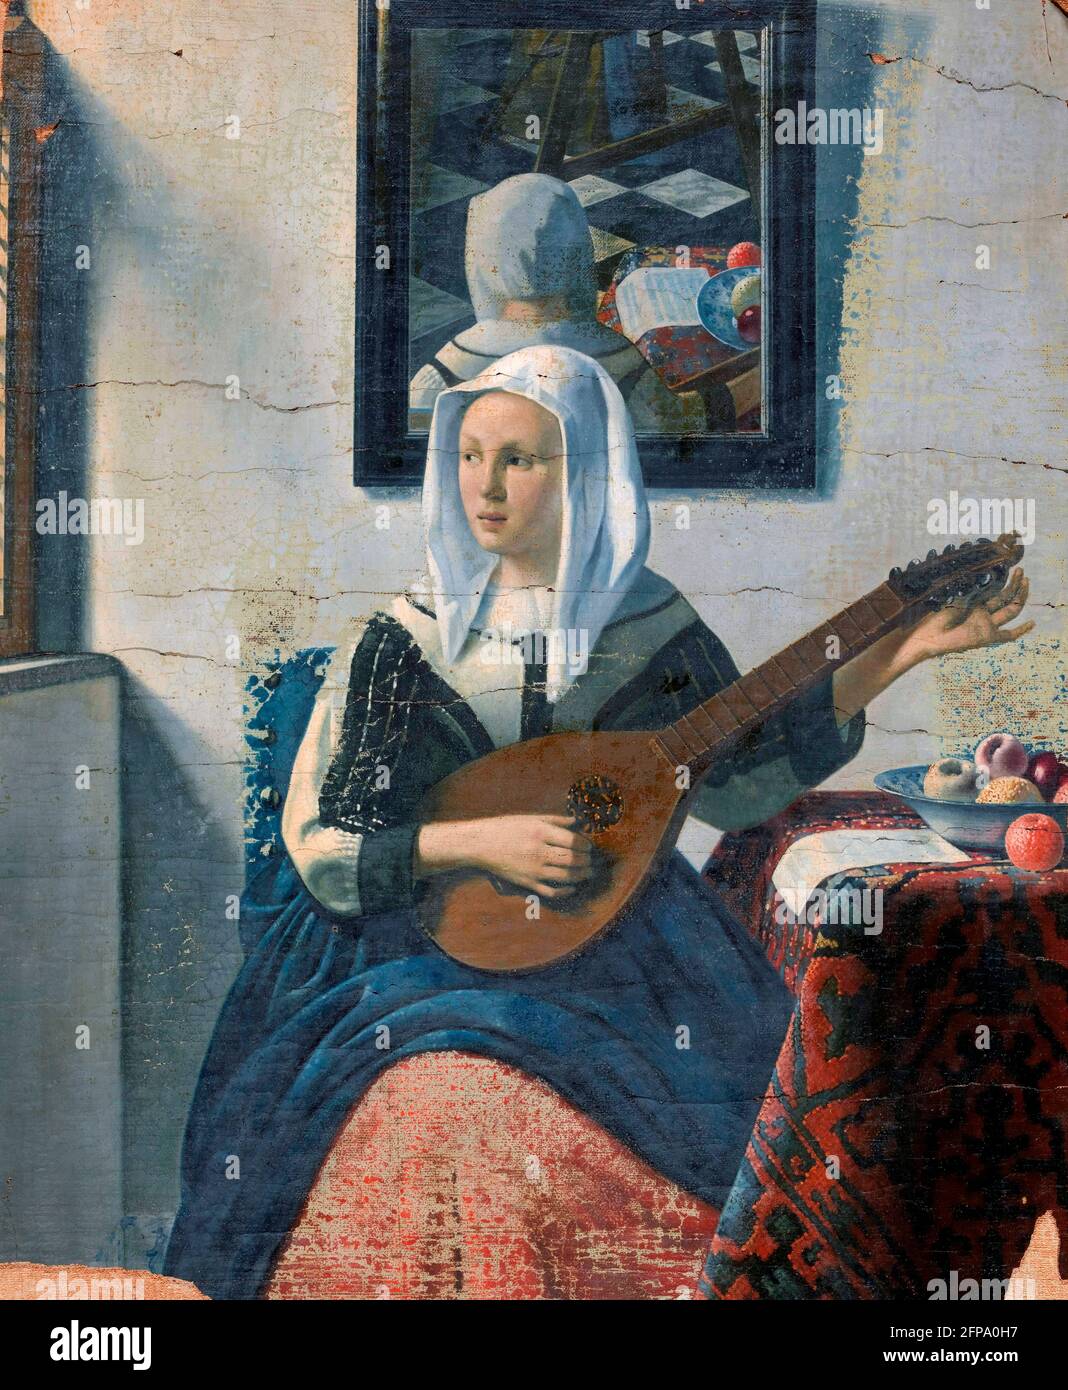 Han van Meegeren. Cisterspelende Vrouw (Mujer tocando un Cittern), una  pintura al estilo de Vermeer del famoso forger de arte holandés, Henricus  Antonius 'Han' van Meegeren (1889-1947), óleo sobre lienzo, 1930-1940  Fotografía